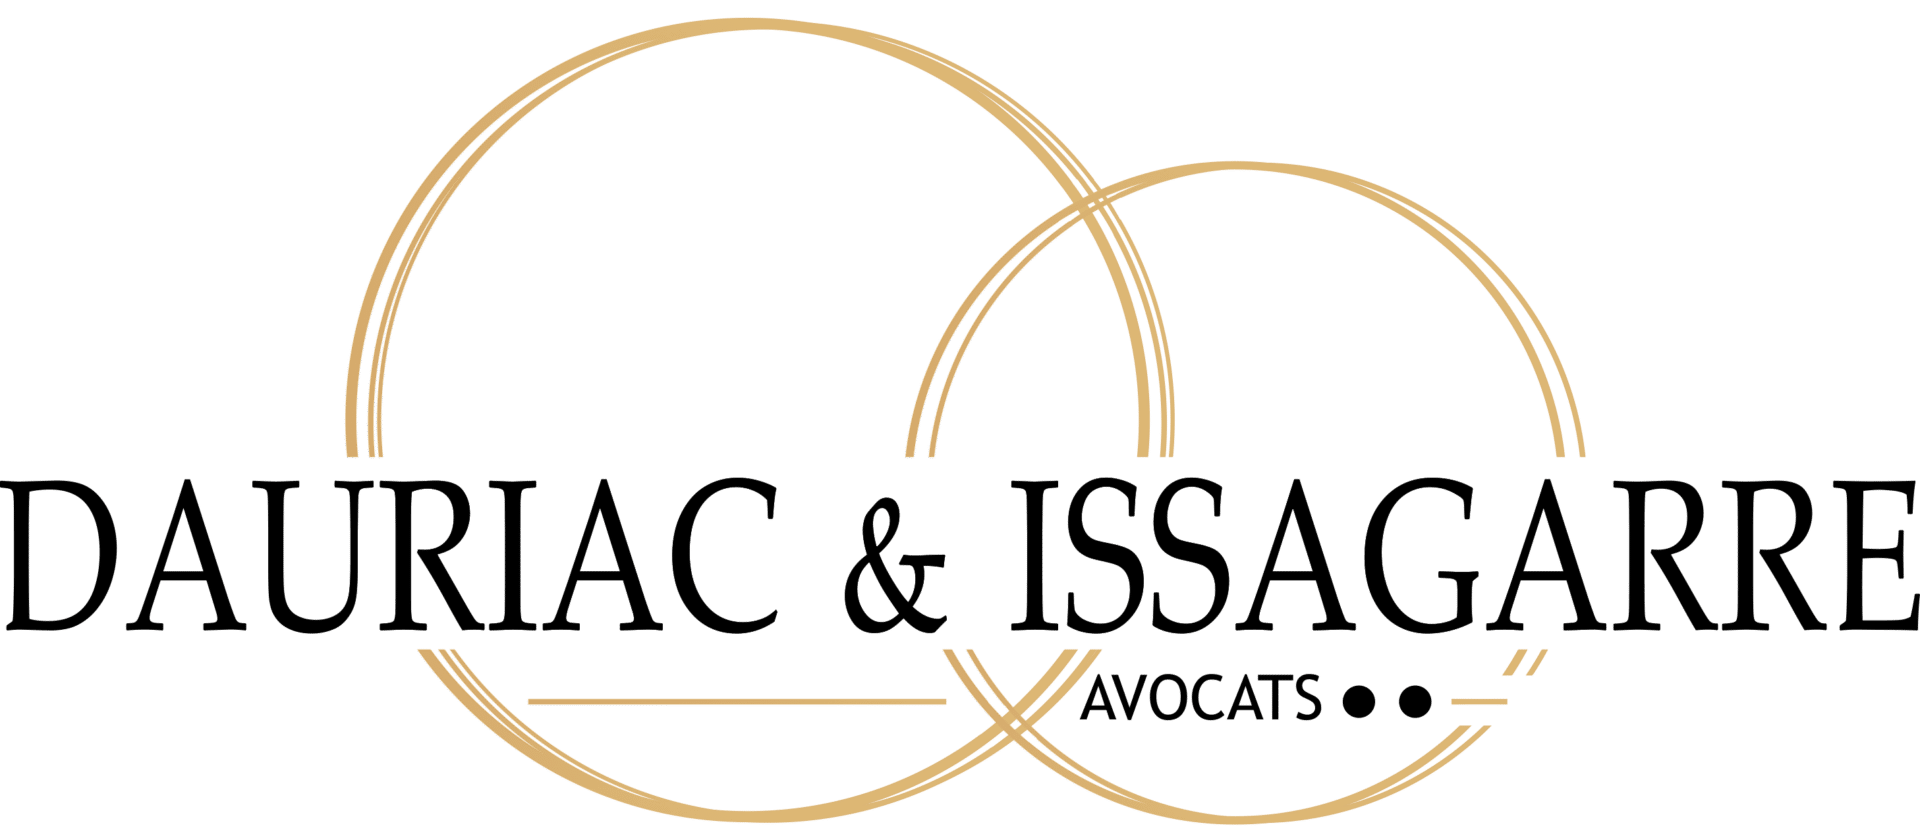 Cabinet d'avocats Dauriac et Issagarre - Logo foncé